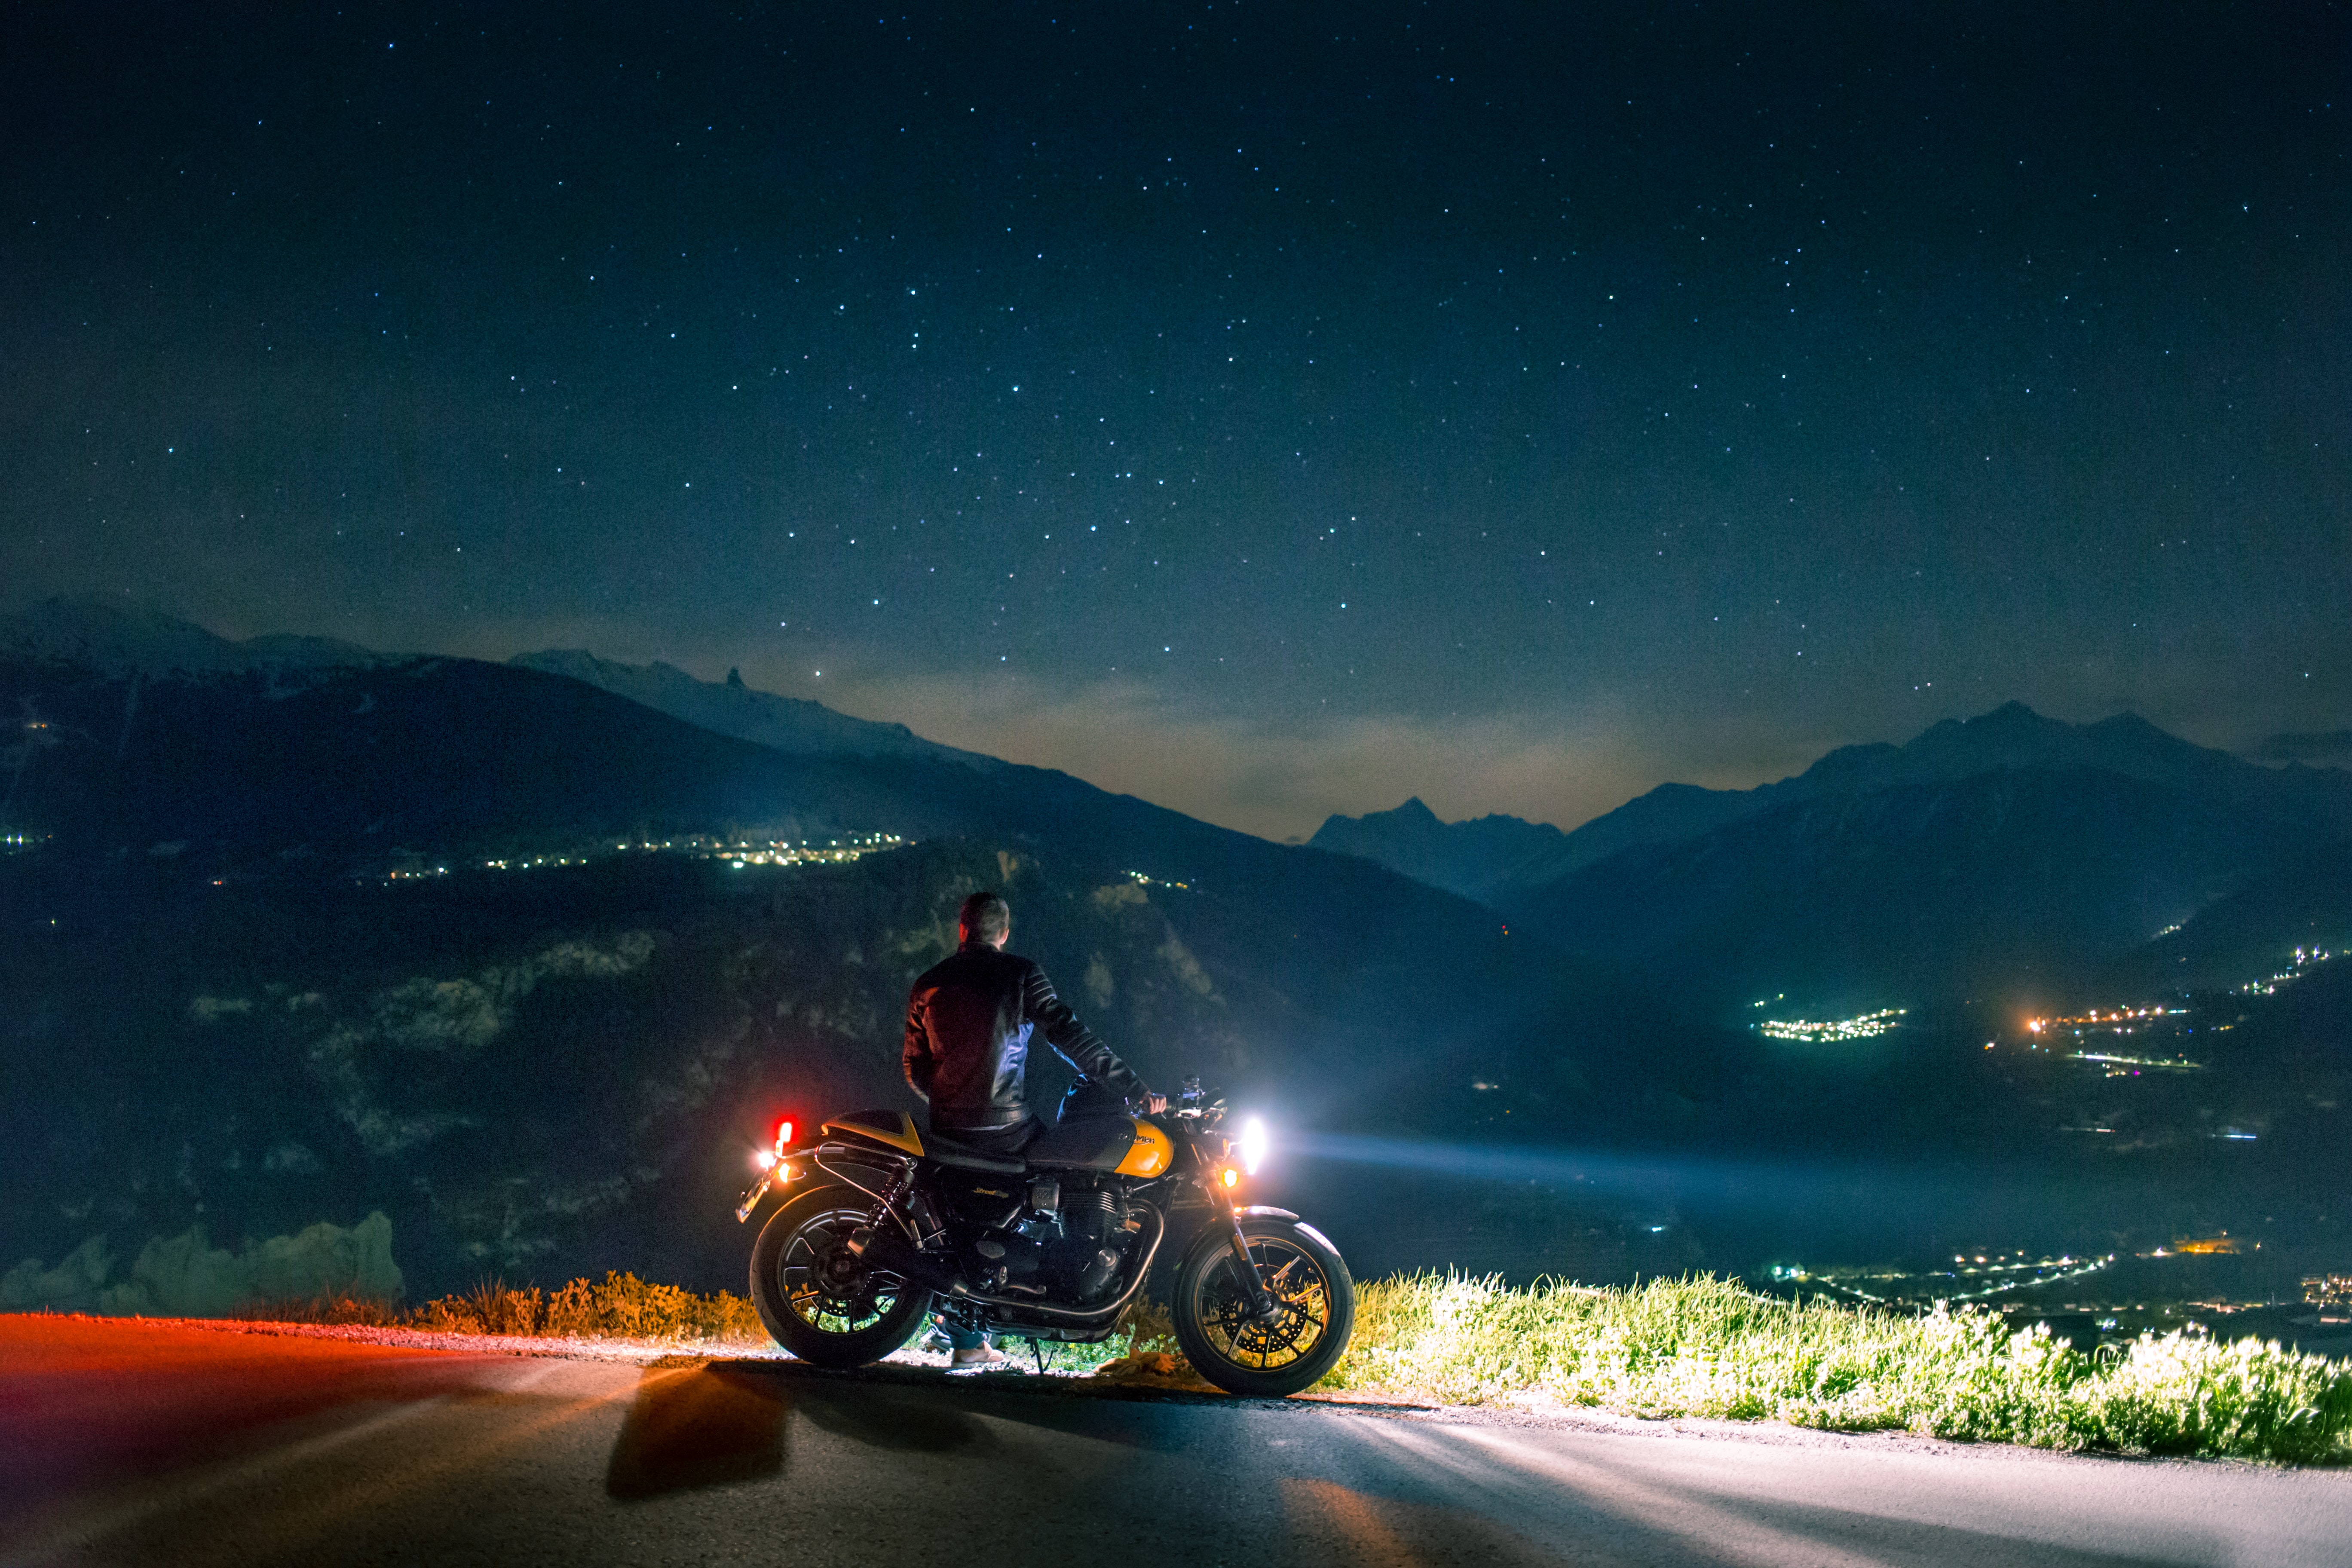 Motorcycle Motorcyclist Bike Night View